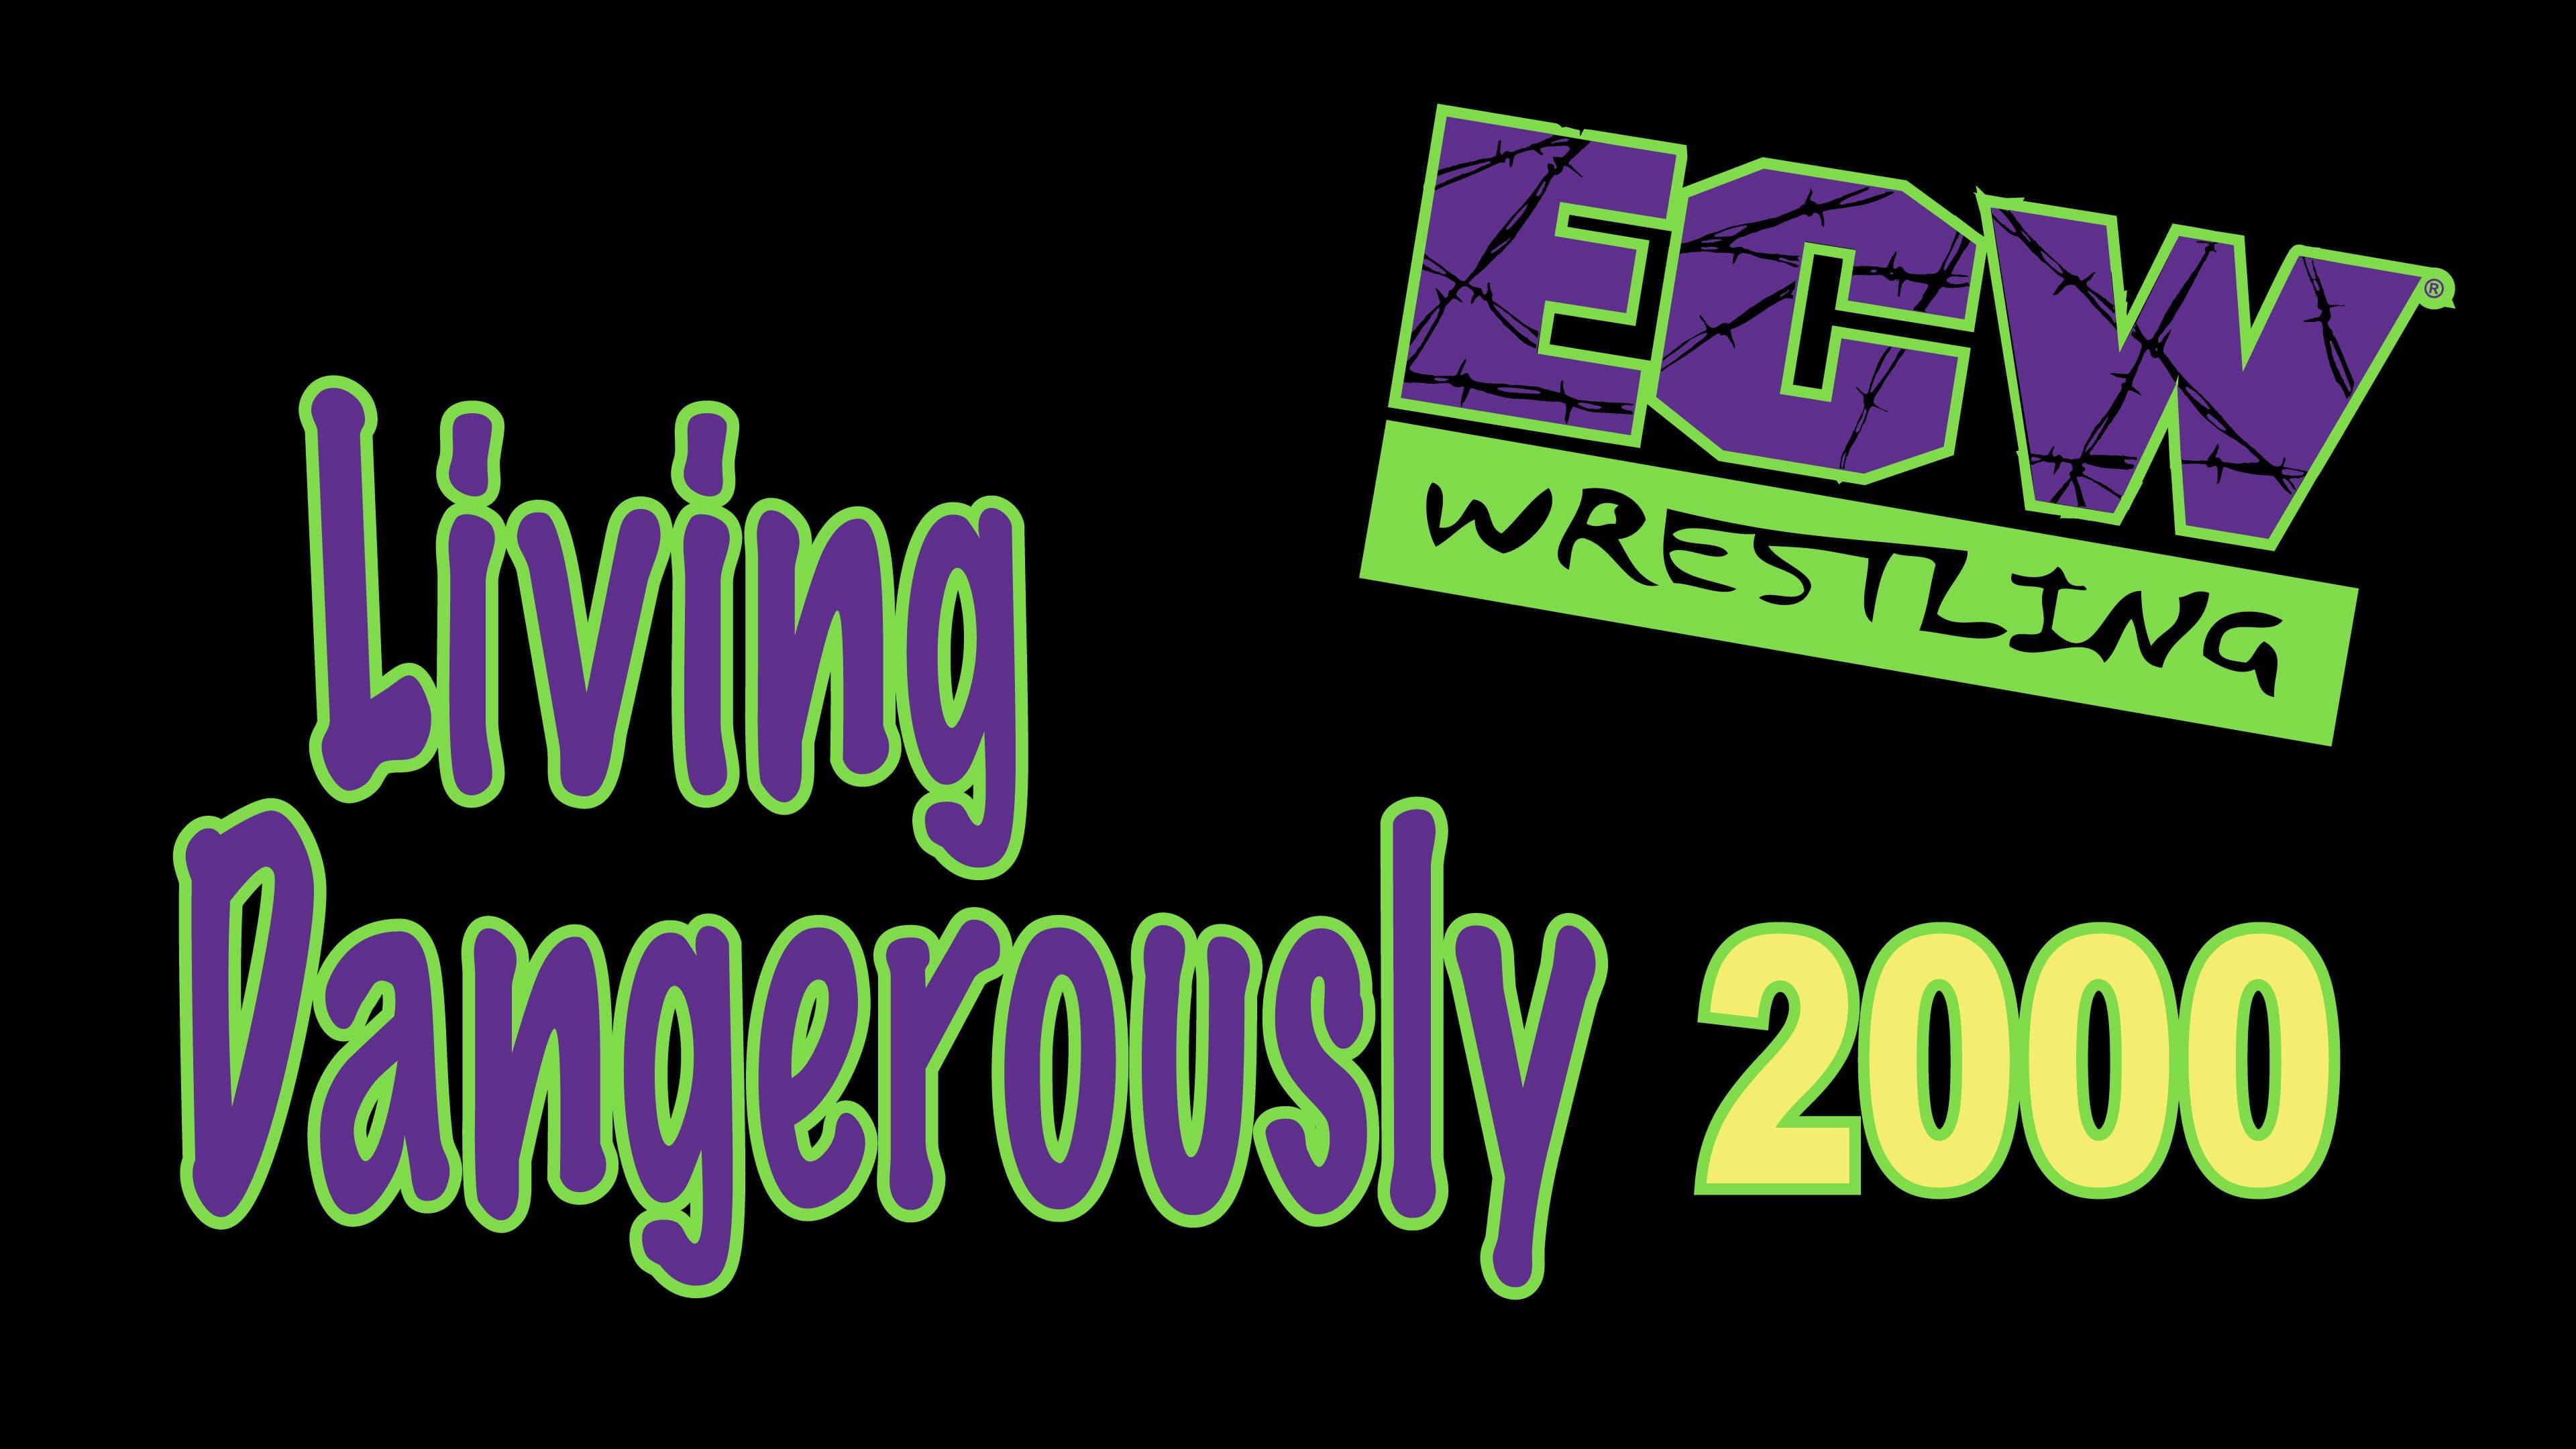 ECW Living Dangerously 2000 backdrop